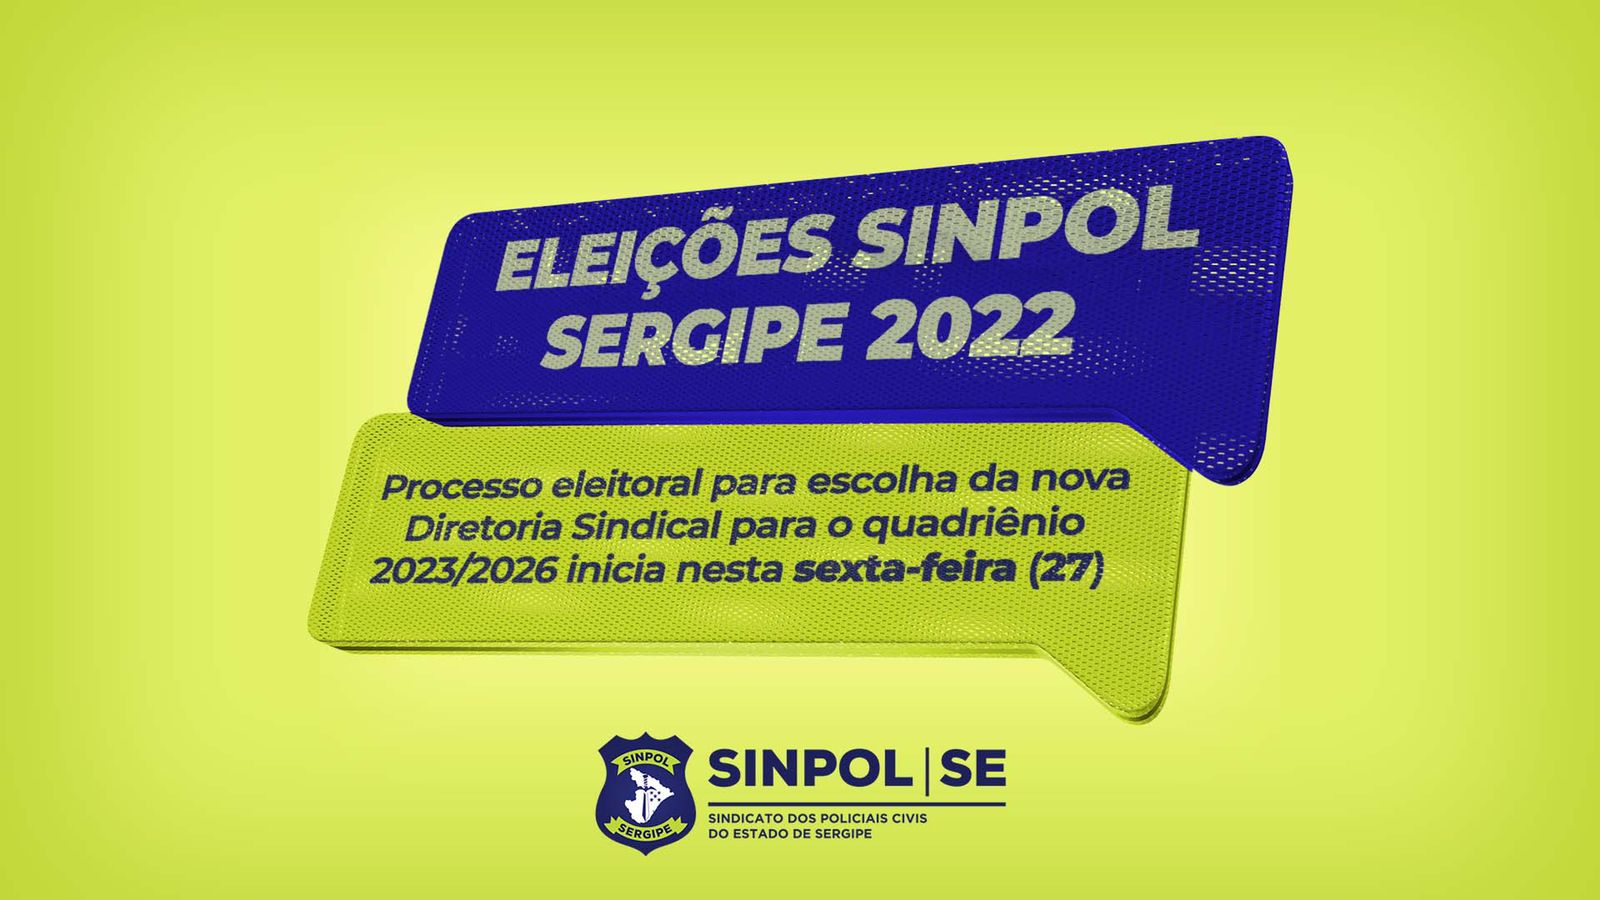 Eleições Sinpol Sergipe 2022